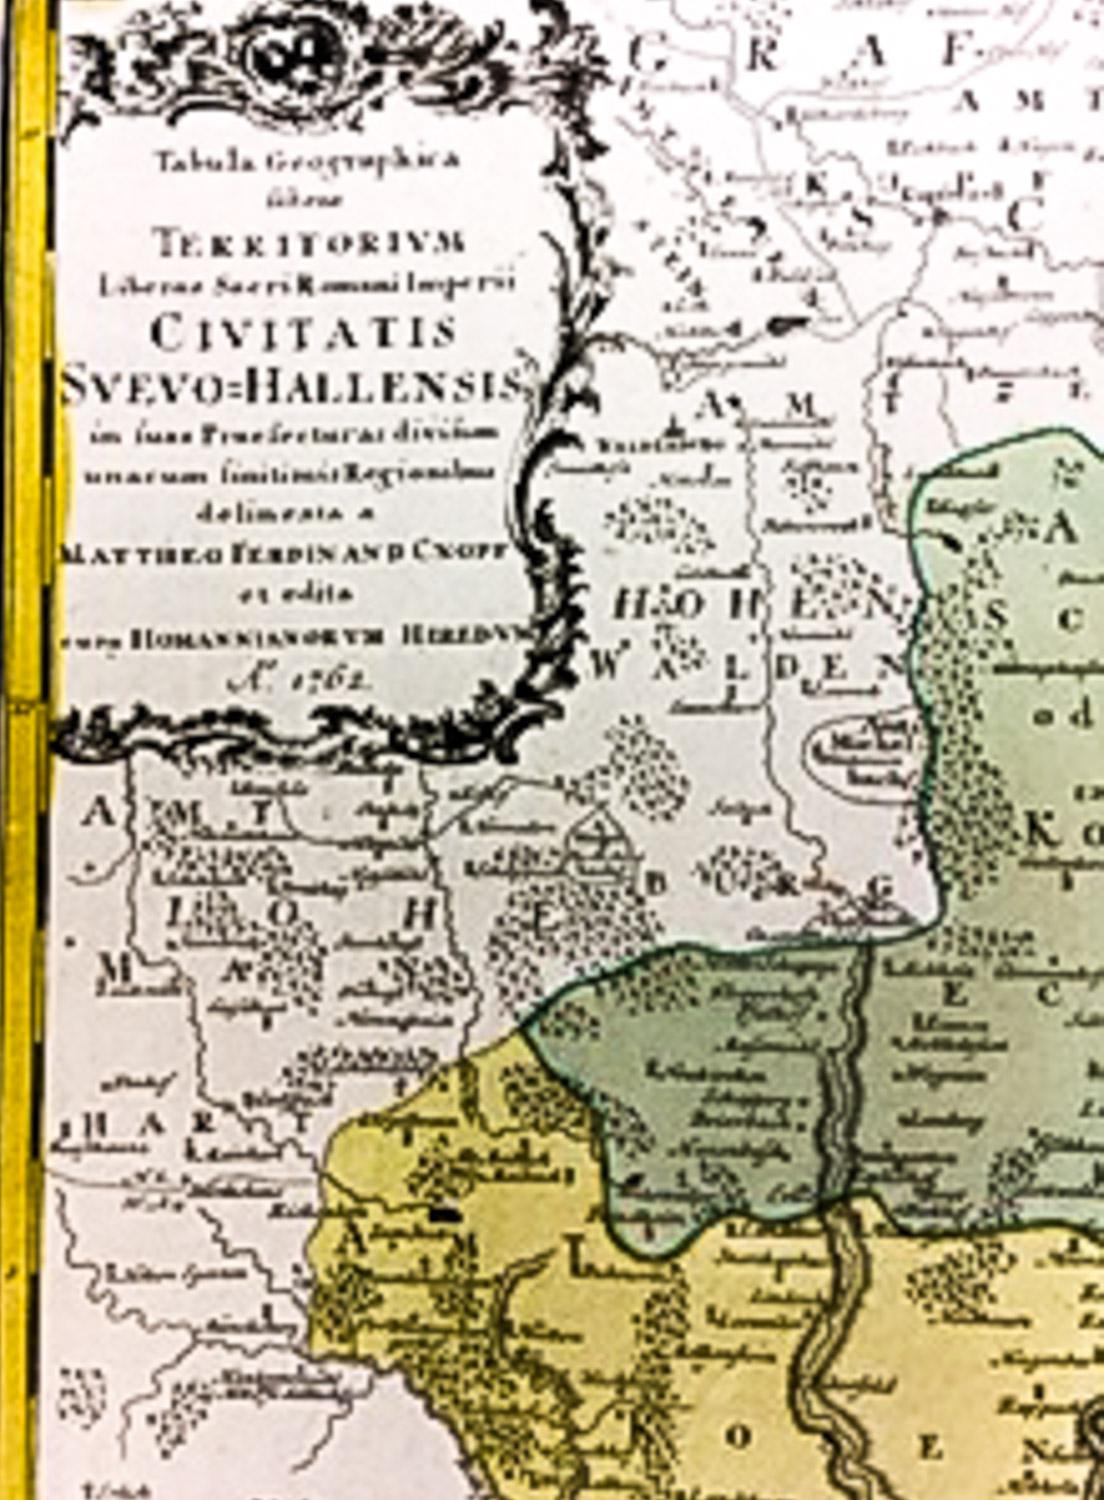 Map of Tabula Geographica Territorium Civitatis Svevo=Hallensis by Homann 1762 - Print by Homann Heirs